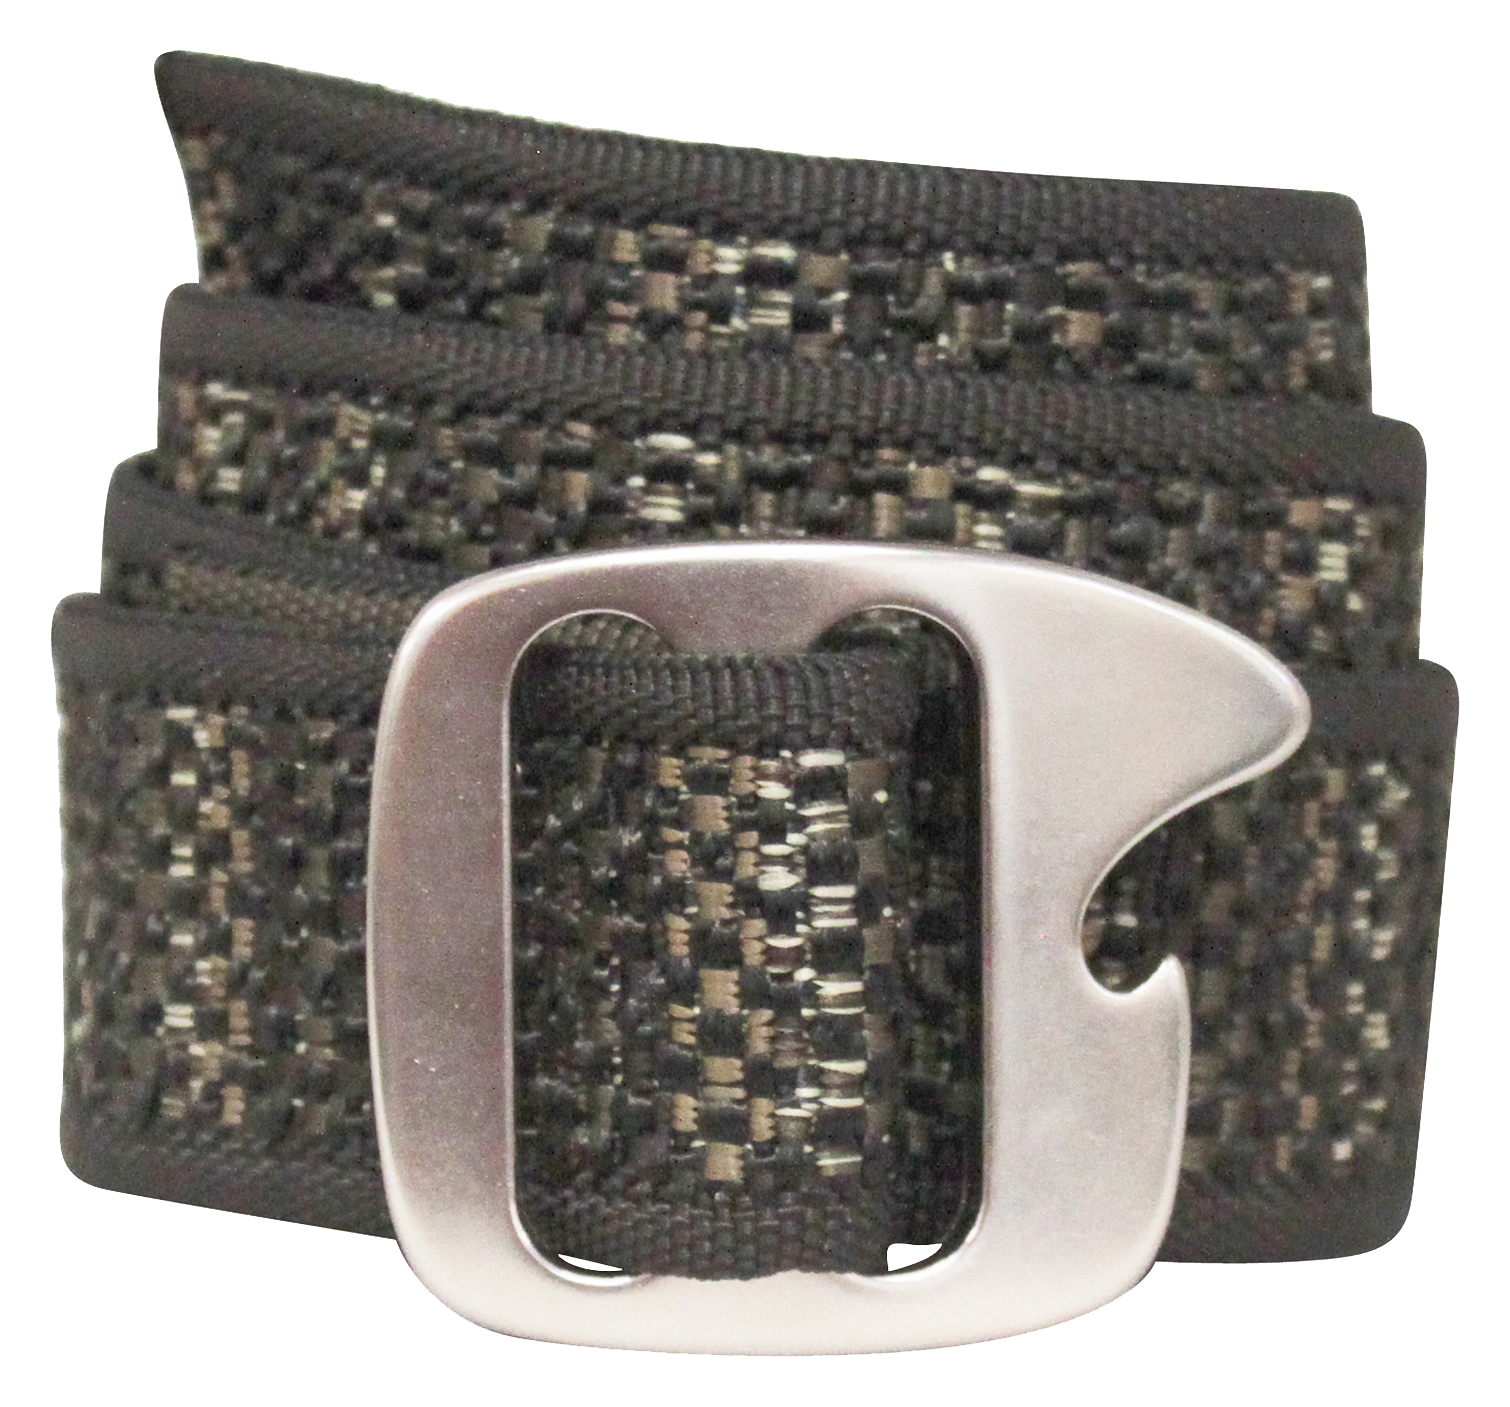 Bison Designs Tap Cap Buckle Belt for Men - Brownstone - XL